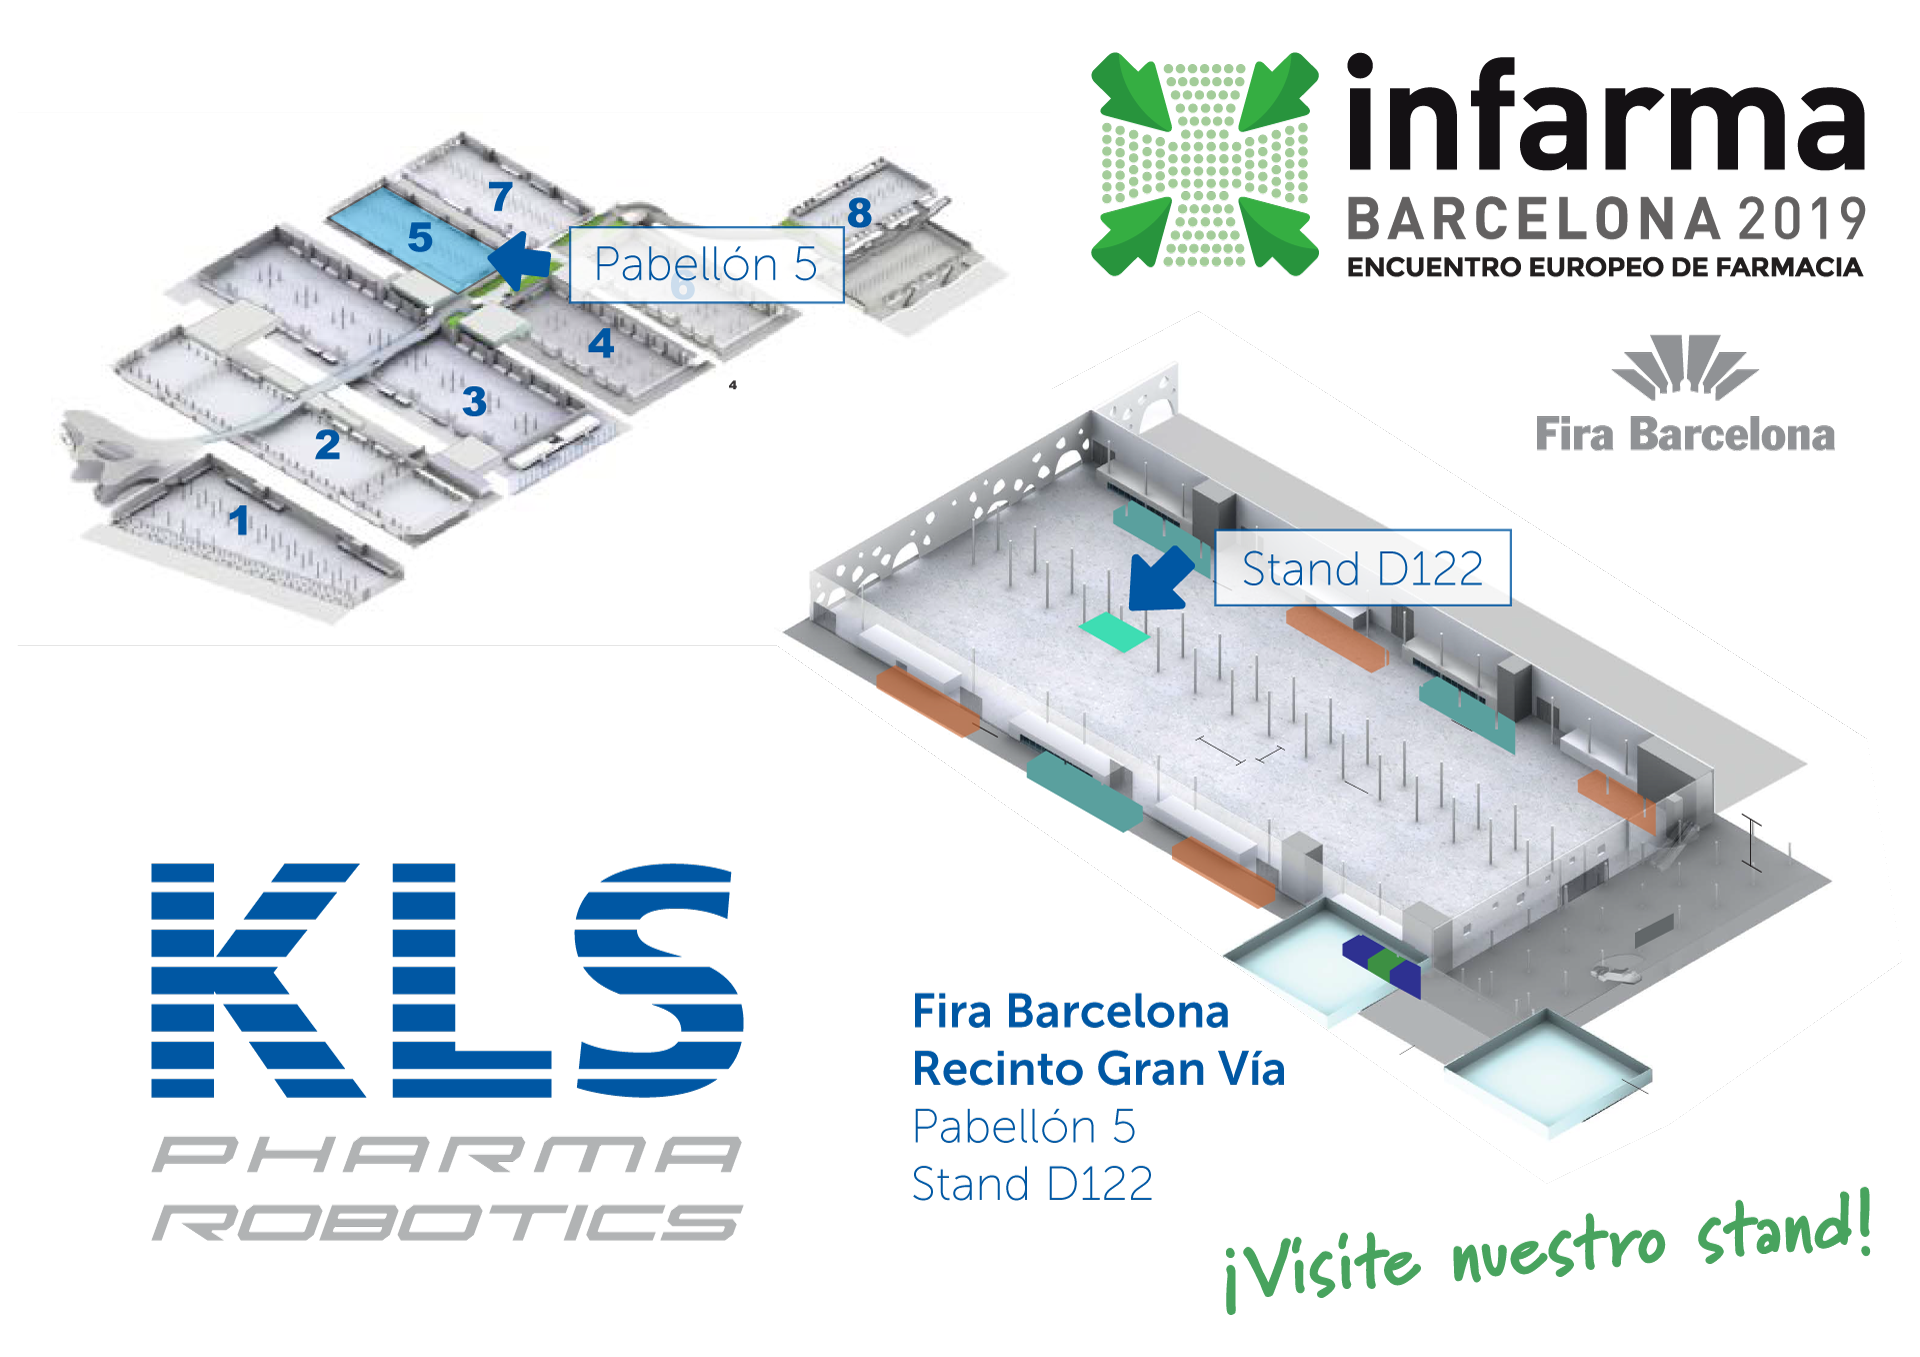 Stand KLS Pharma Robotics en Infarma Barcelona 2017